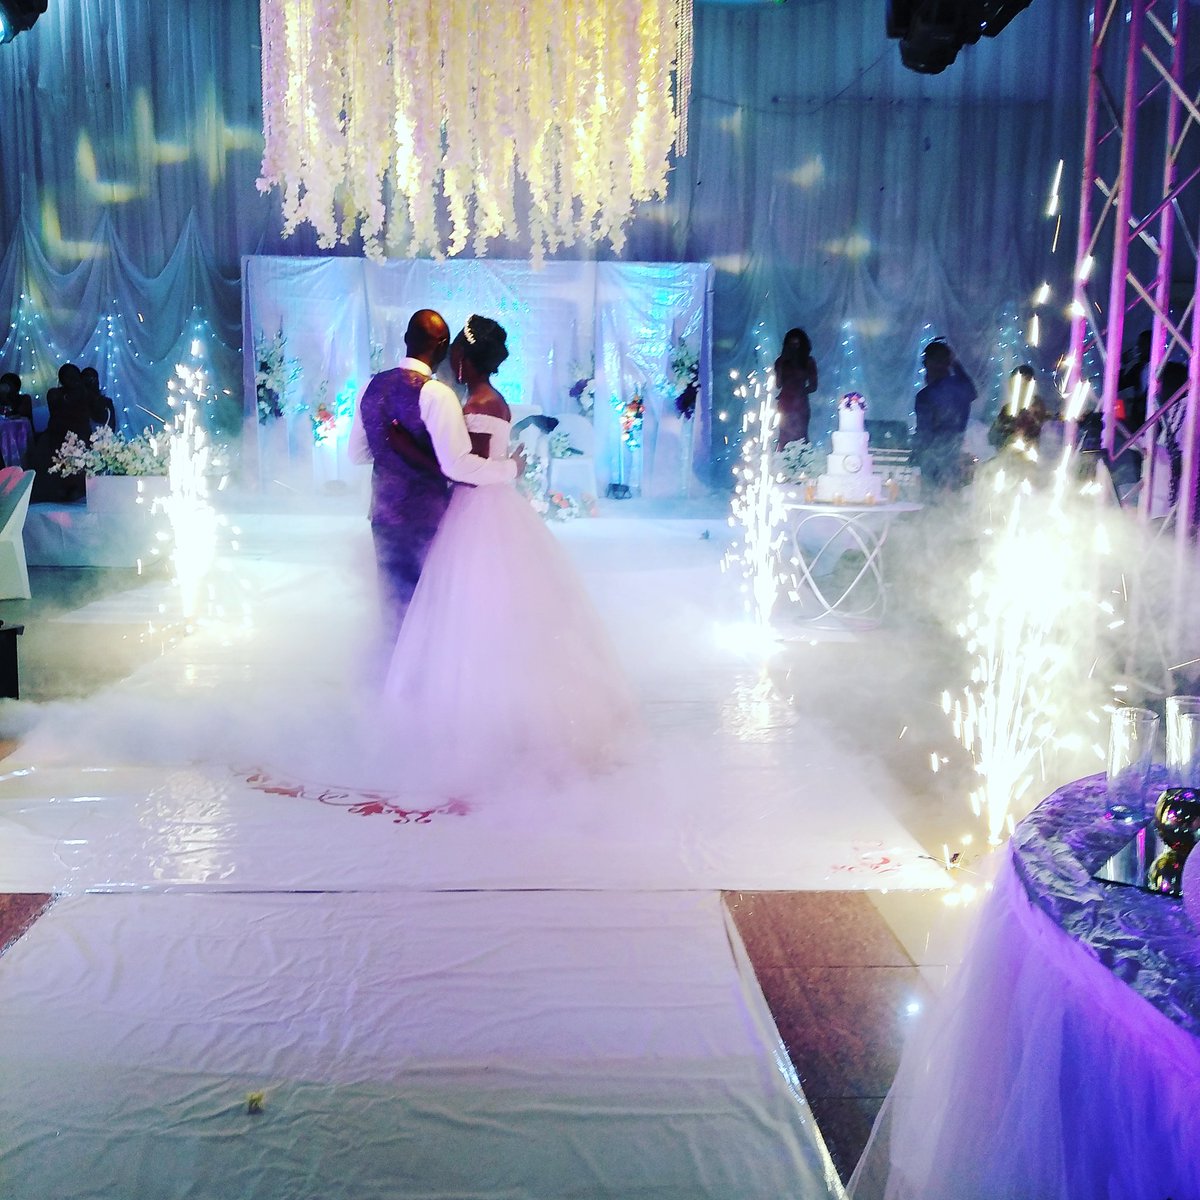 When love happens 💖💞😍
..
#decorbywytezkakes #venuestyling #eventdecorations #weddings #wytezkakes